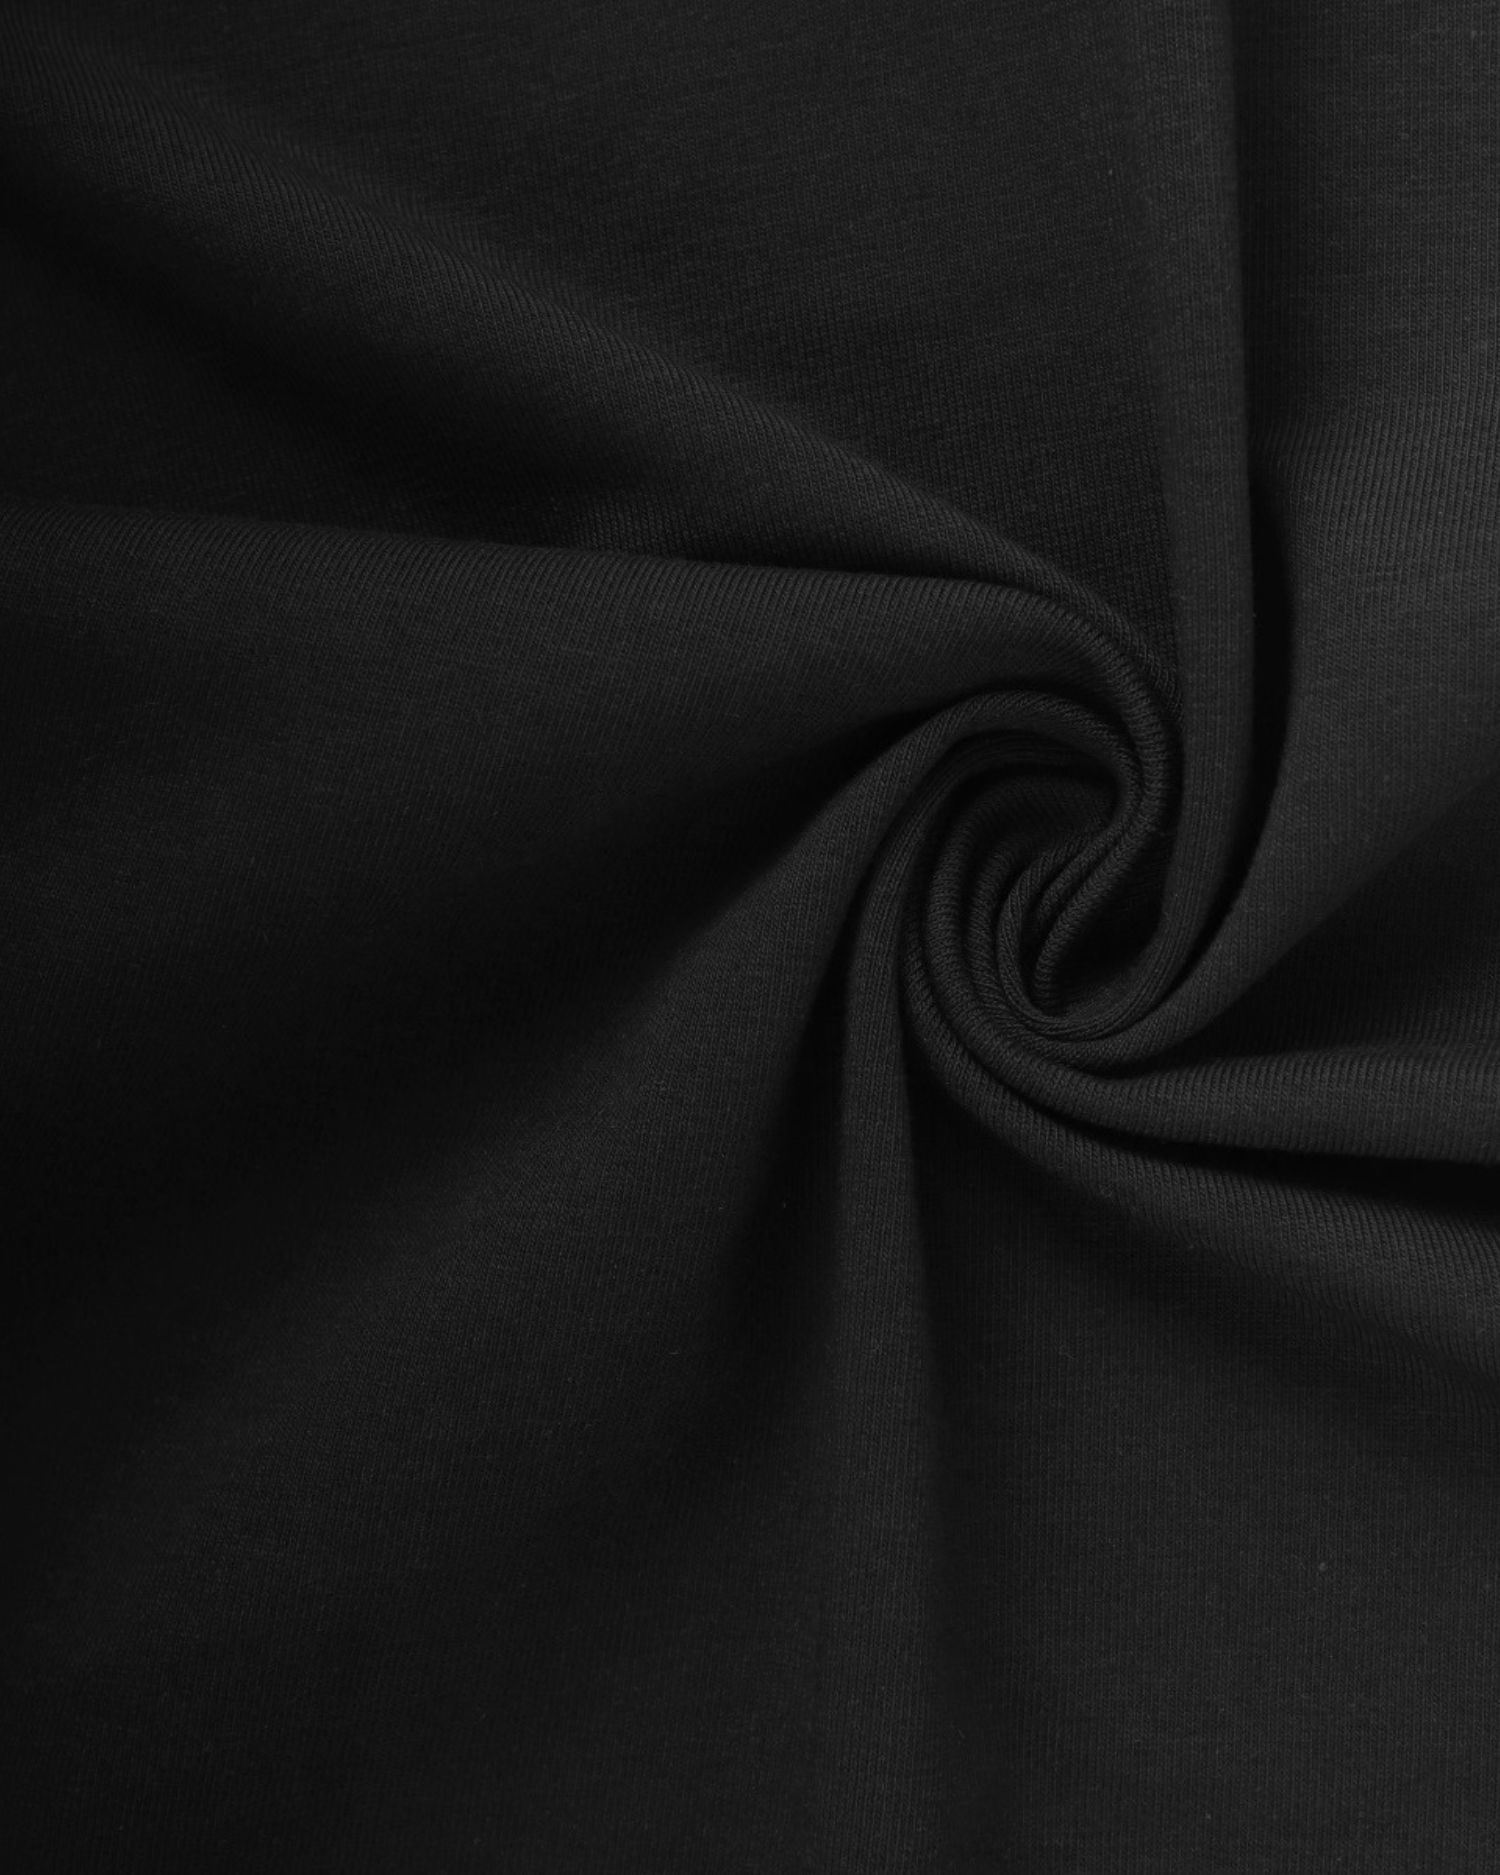 Cotton single Jersey with elastane, 1 meter, 185gr/m2, black